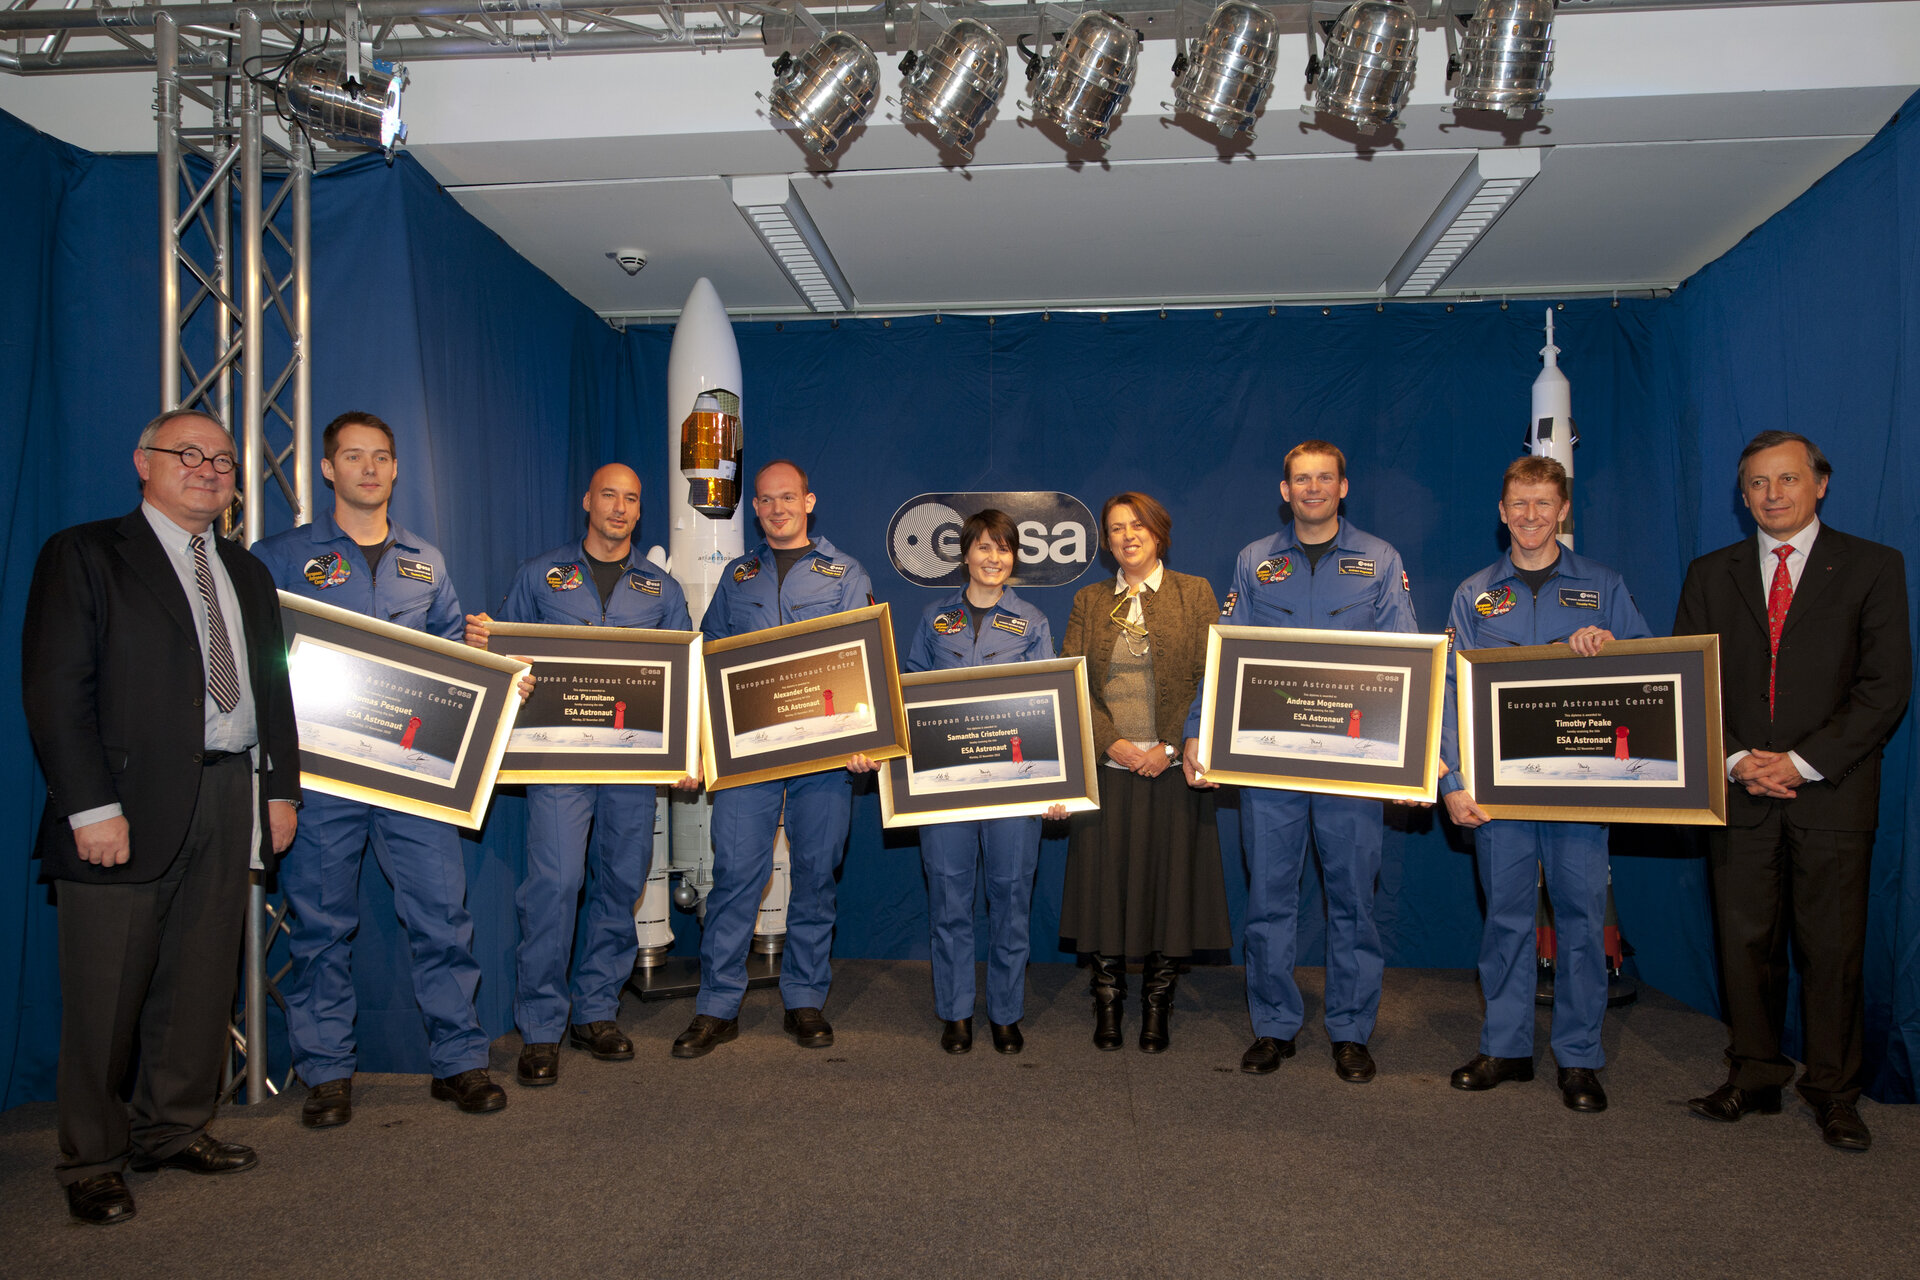 ESA's new astronauts display their diplomas